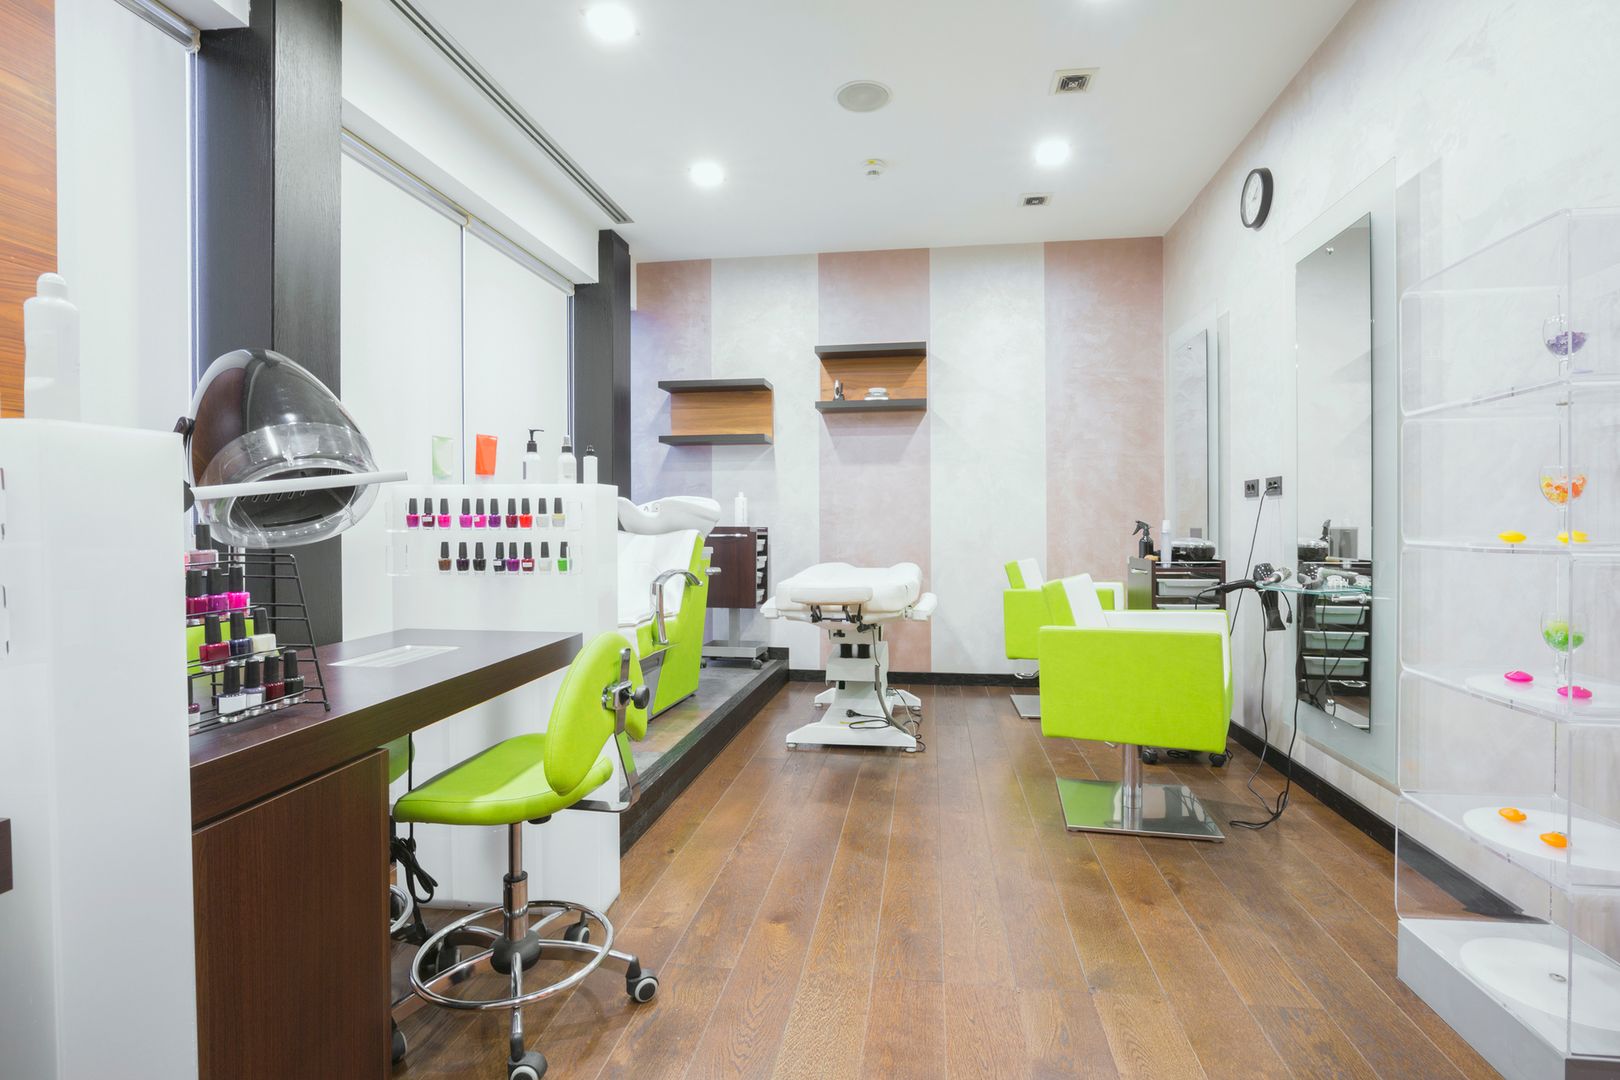 Modern beauty salon interior